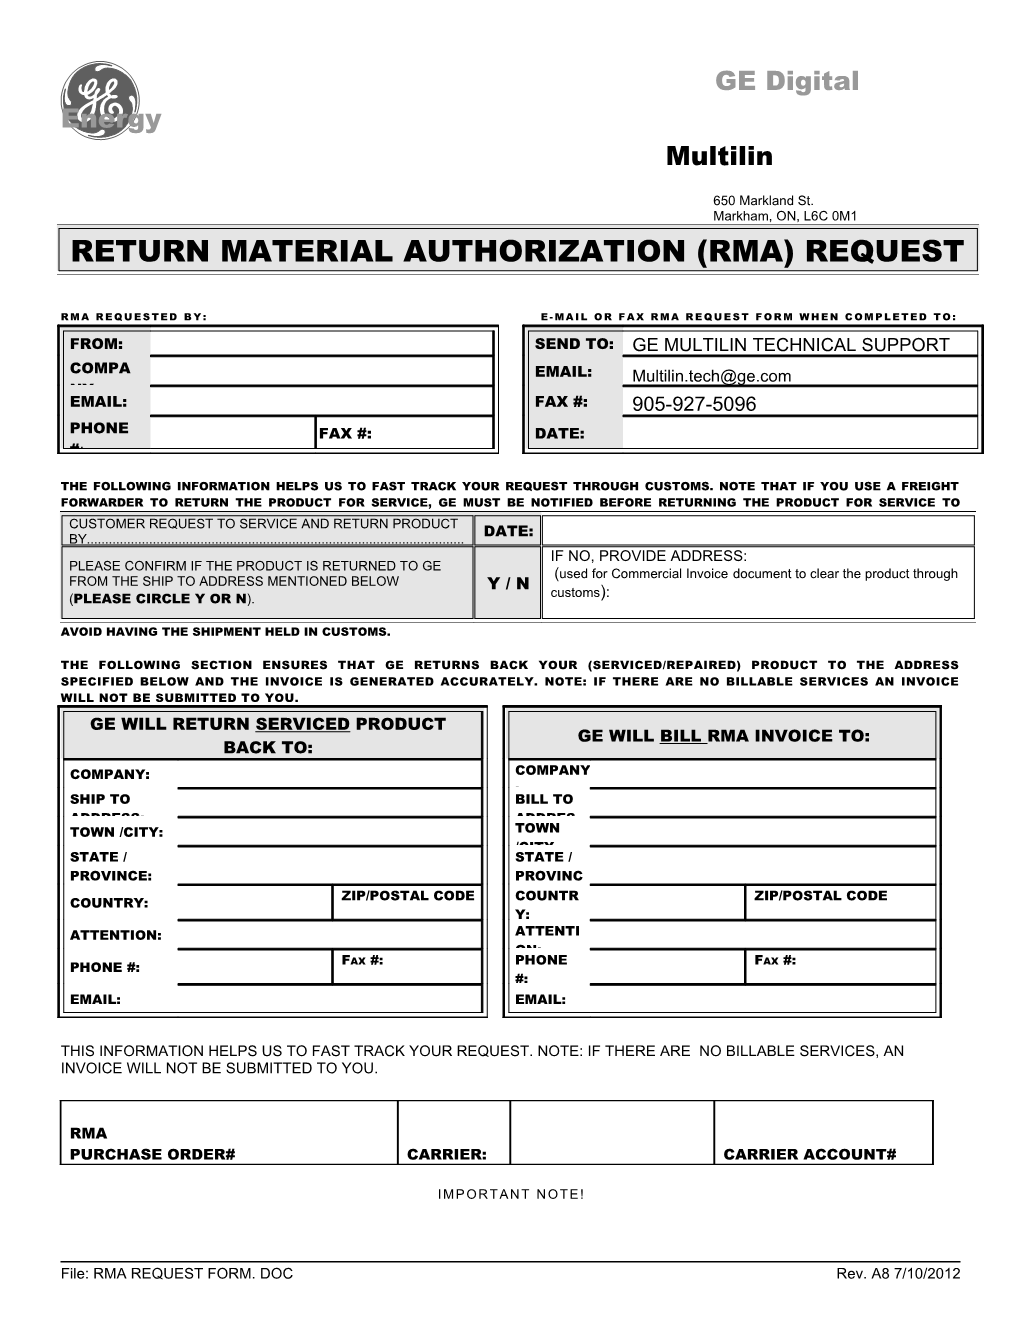 Return Material Authorization (Rma) Request